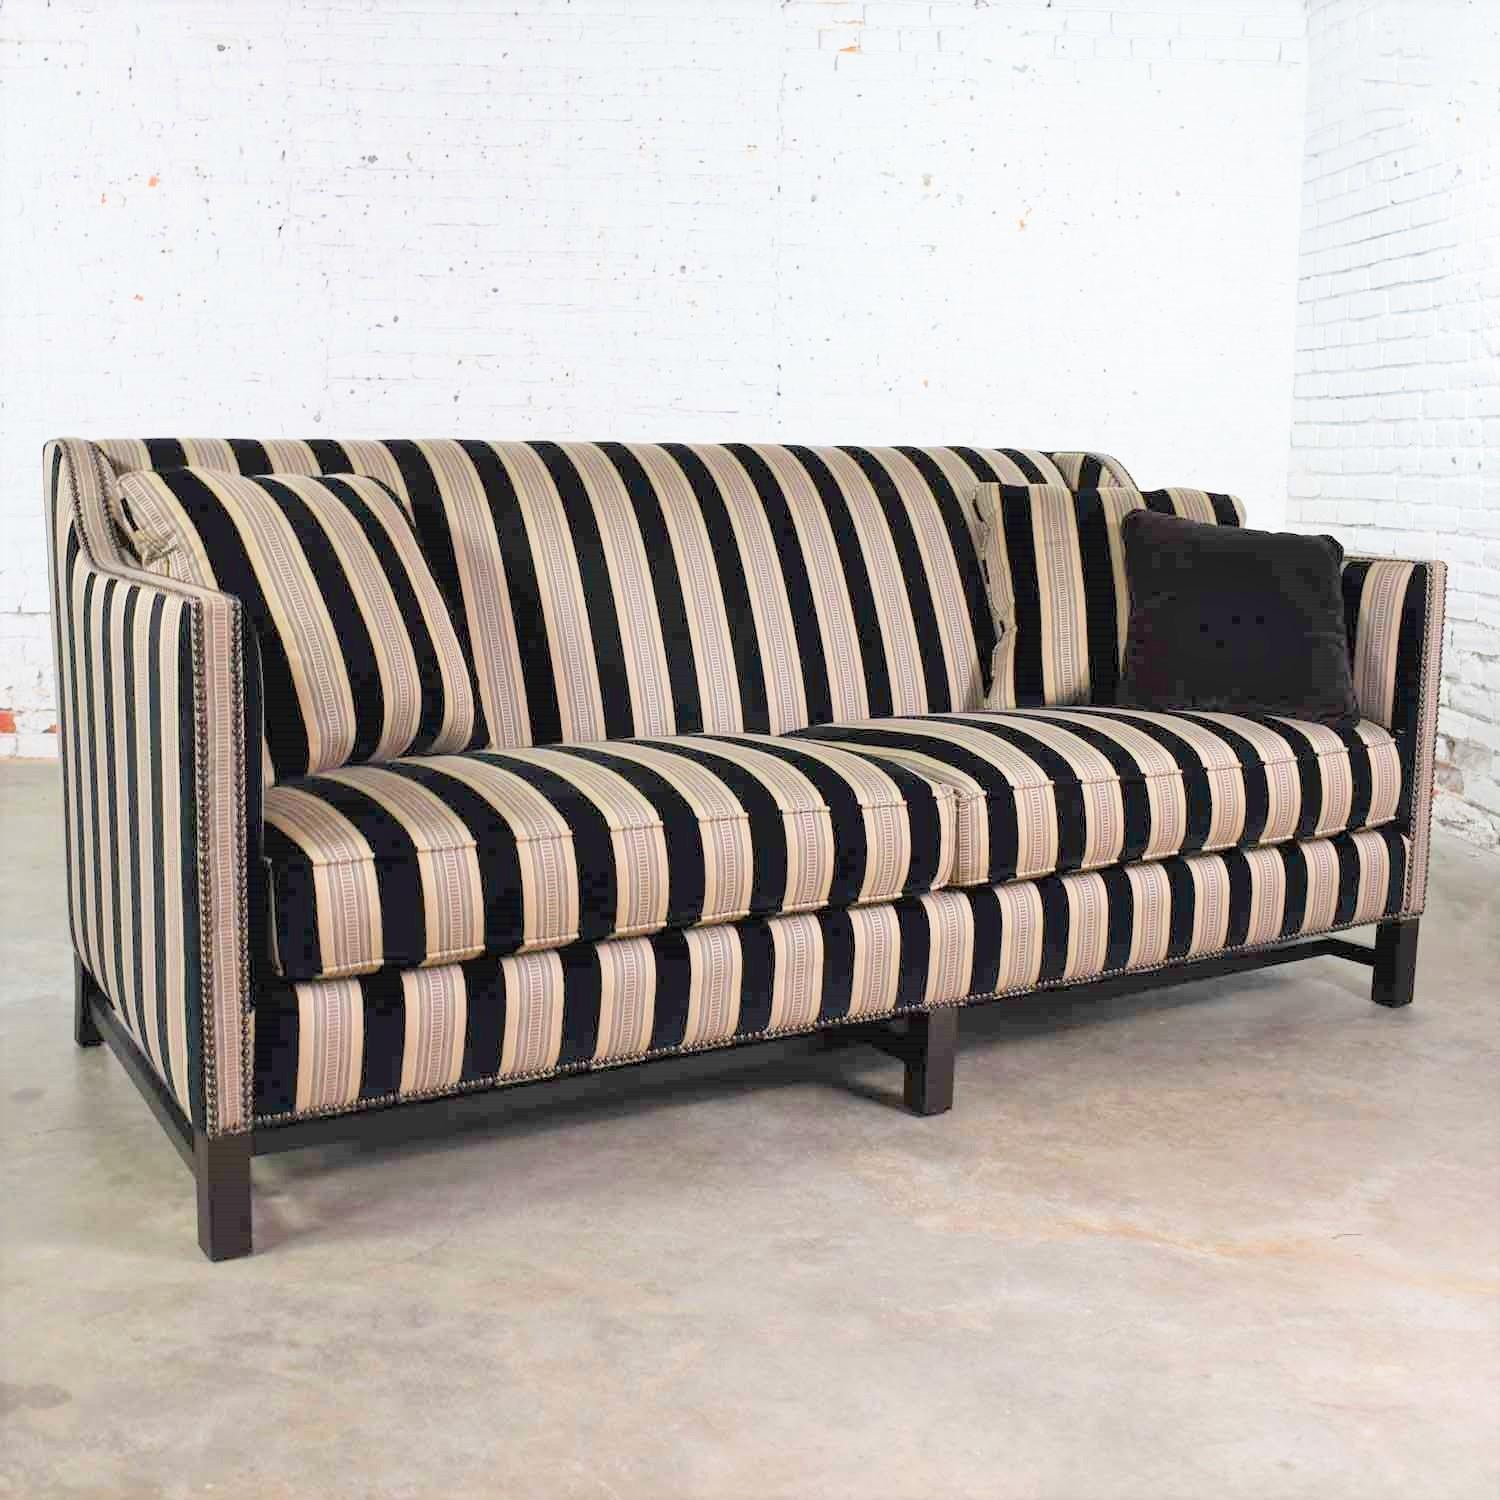 American Black & Taupe Stripe Tuxedo Sloped Arm Sofa by Bernhardt Interiors w/ Nail Heads